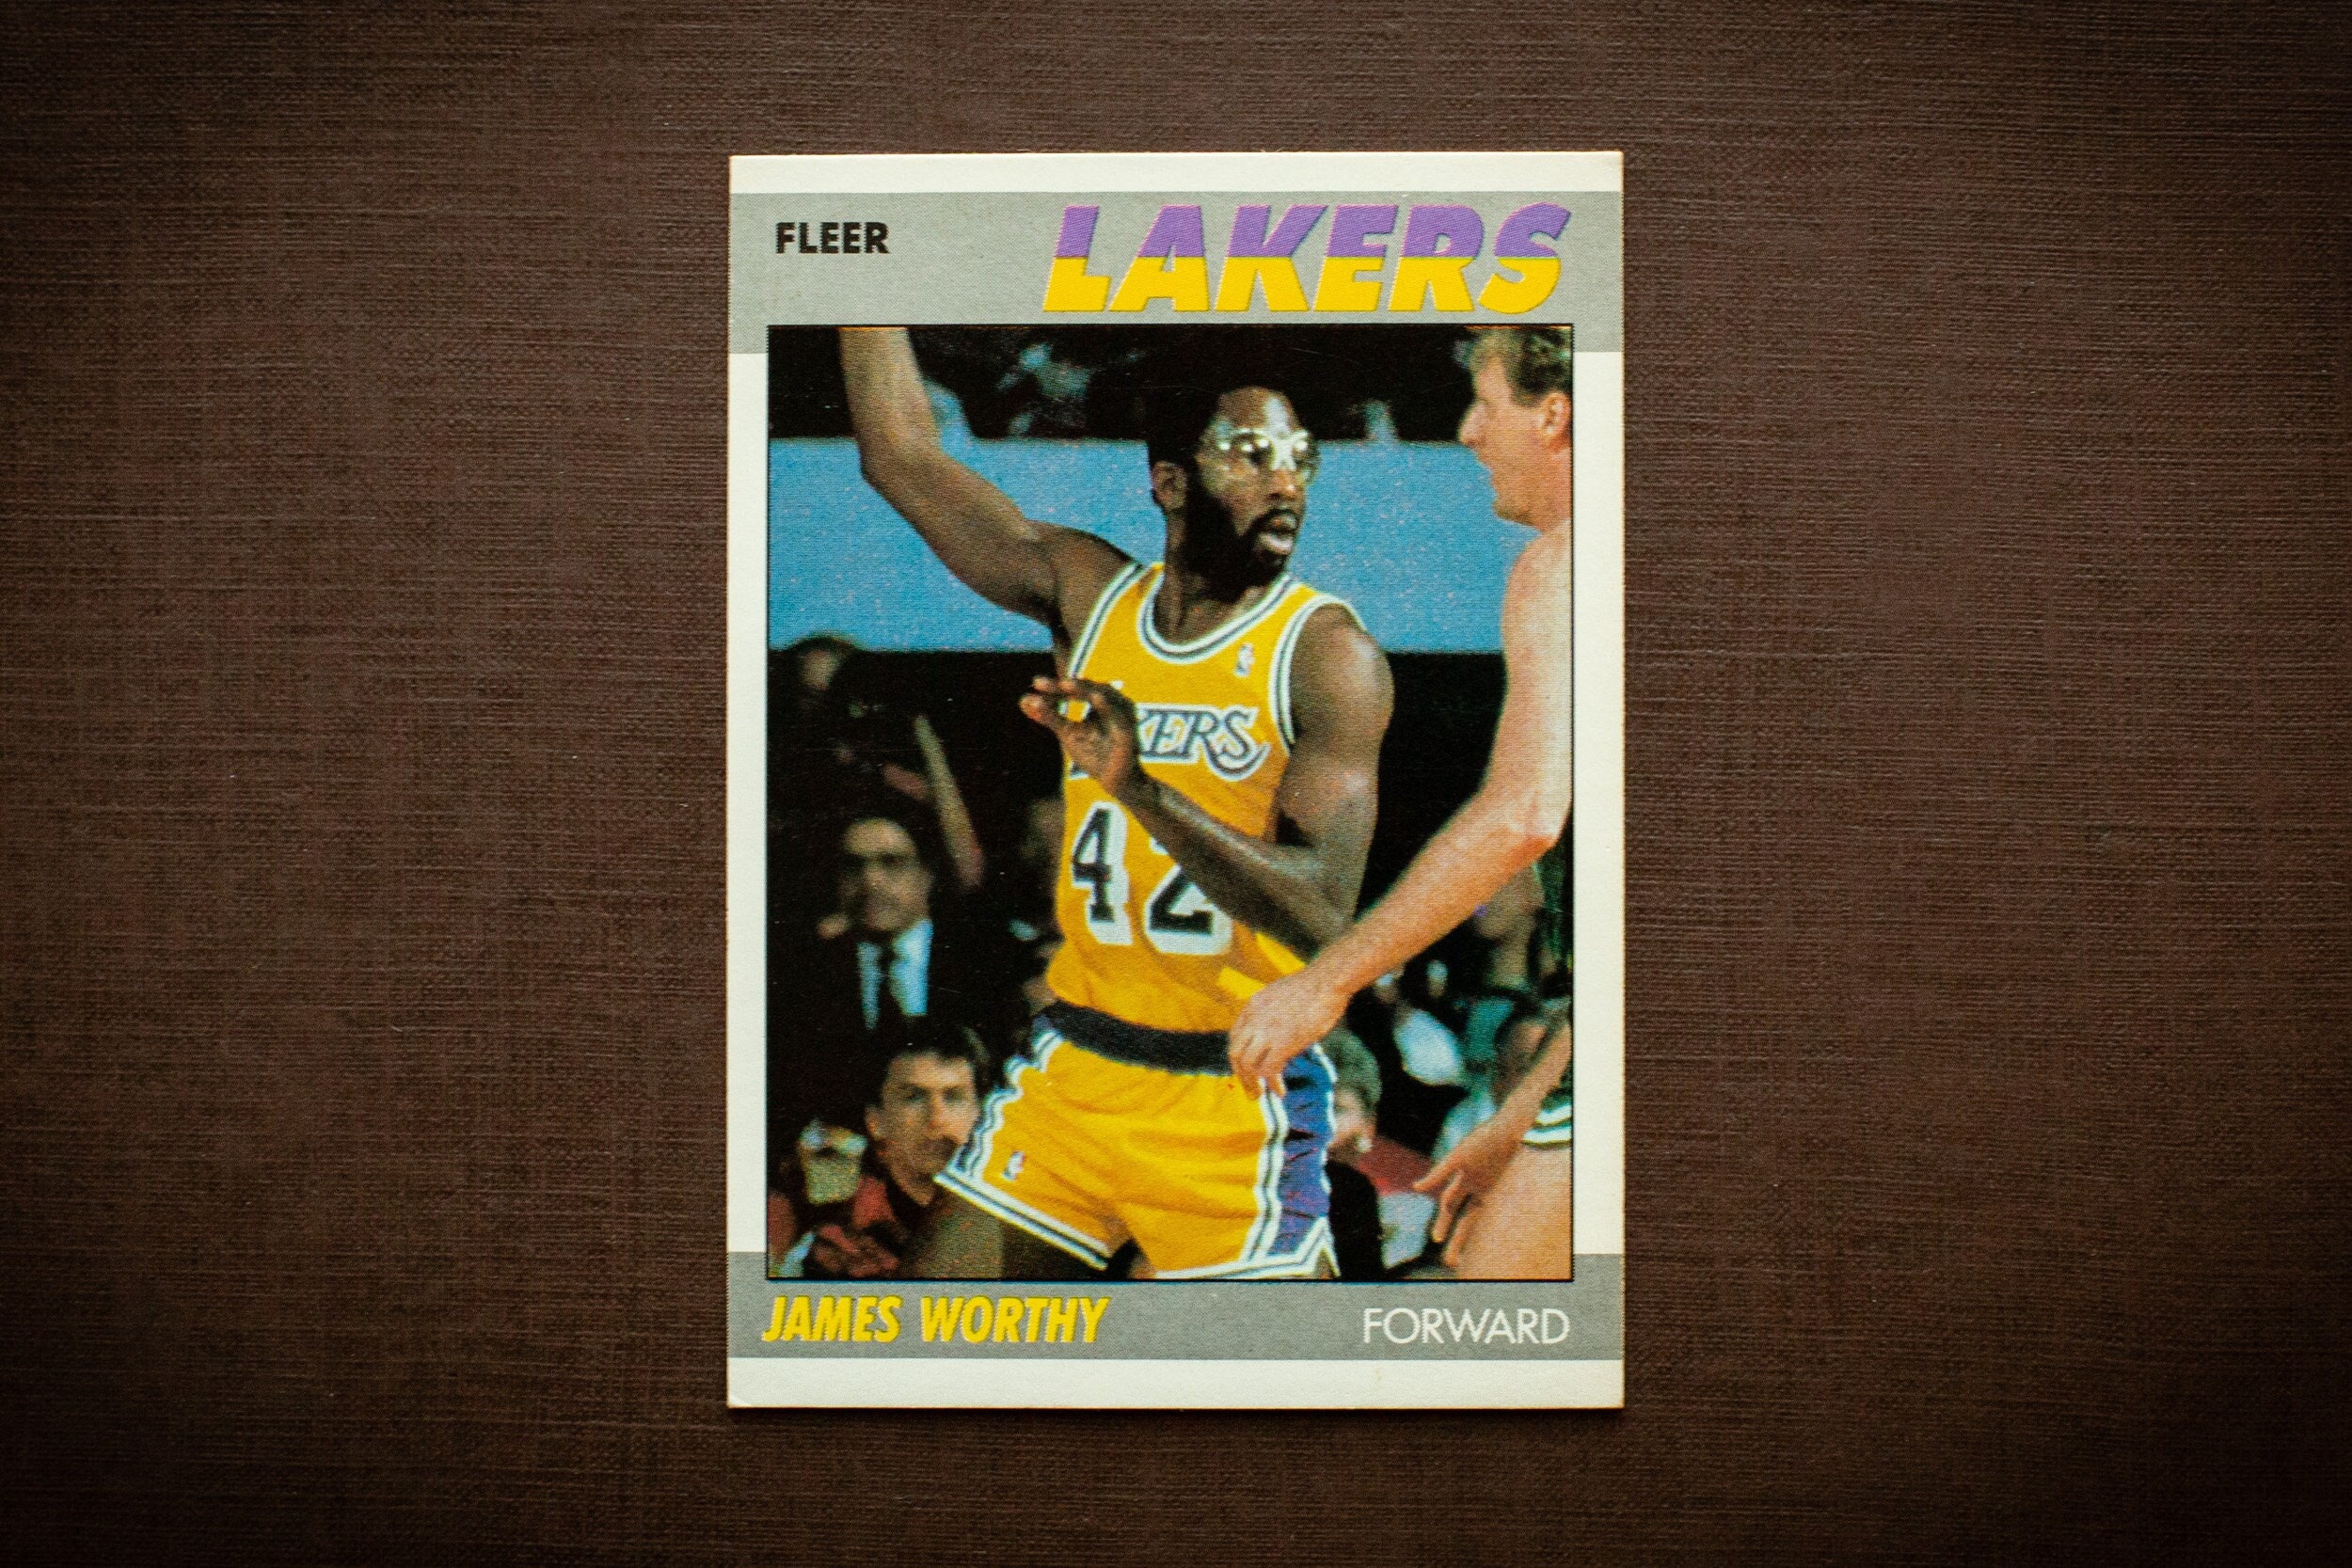 Vintage 1980s Los Angeles LA Lakers Sand Knit JERSEY - S – Rad Max Vintage